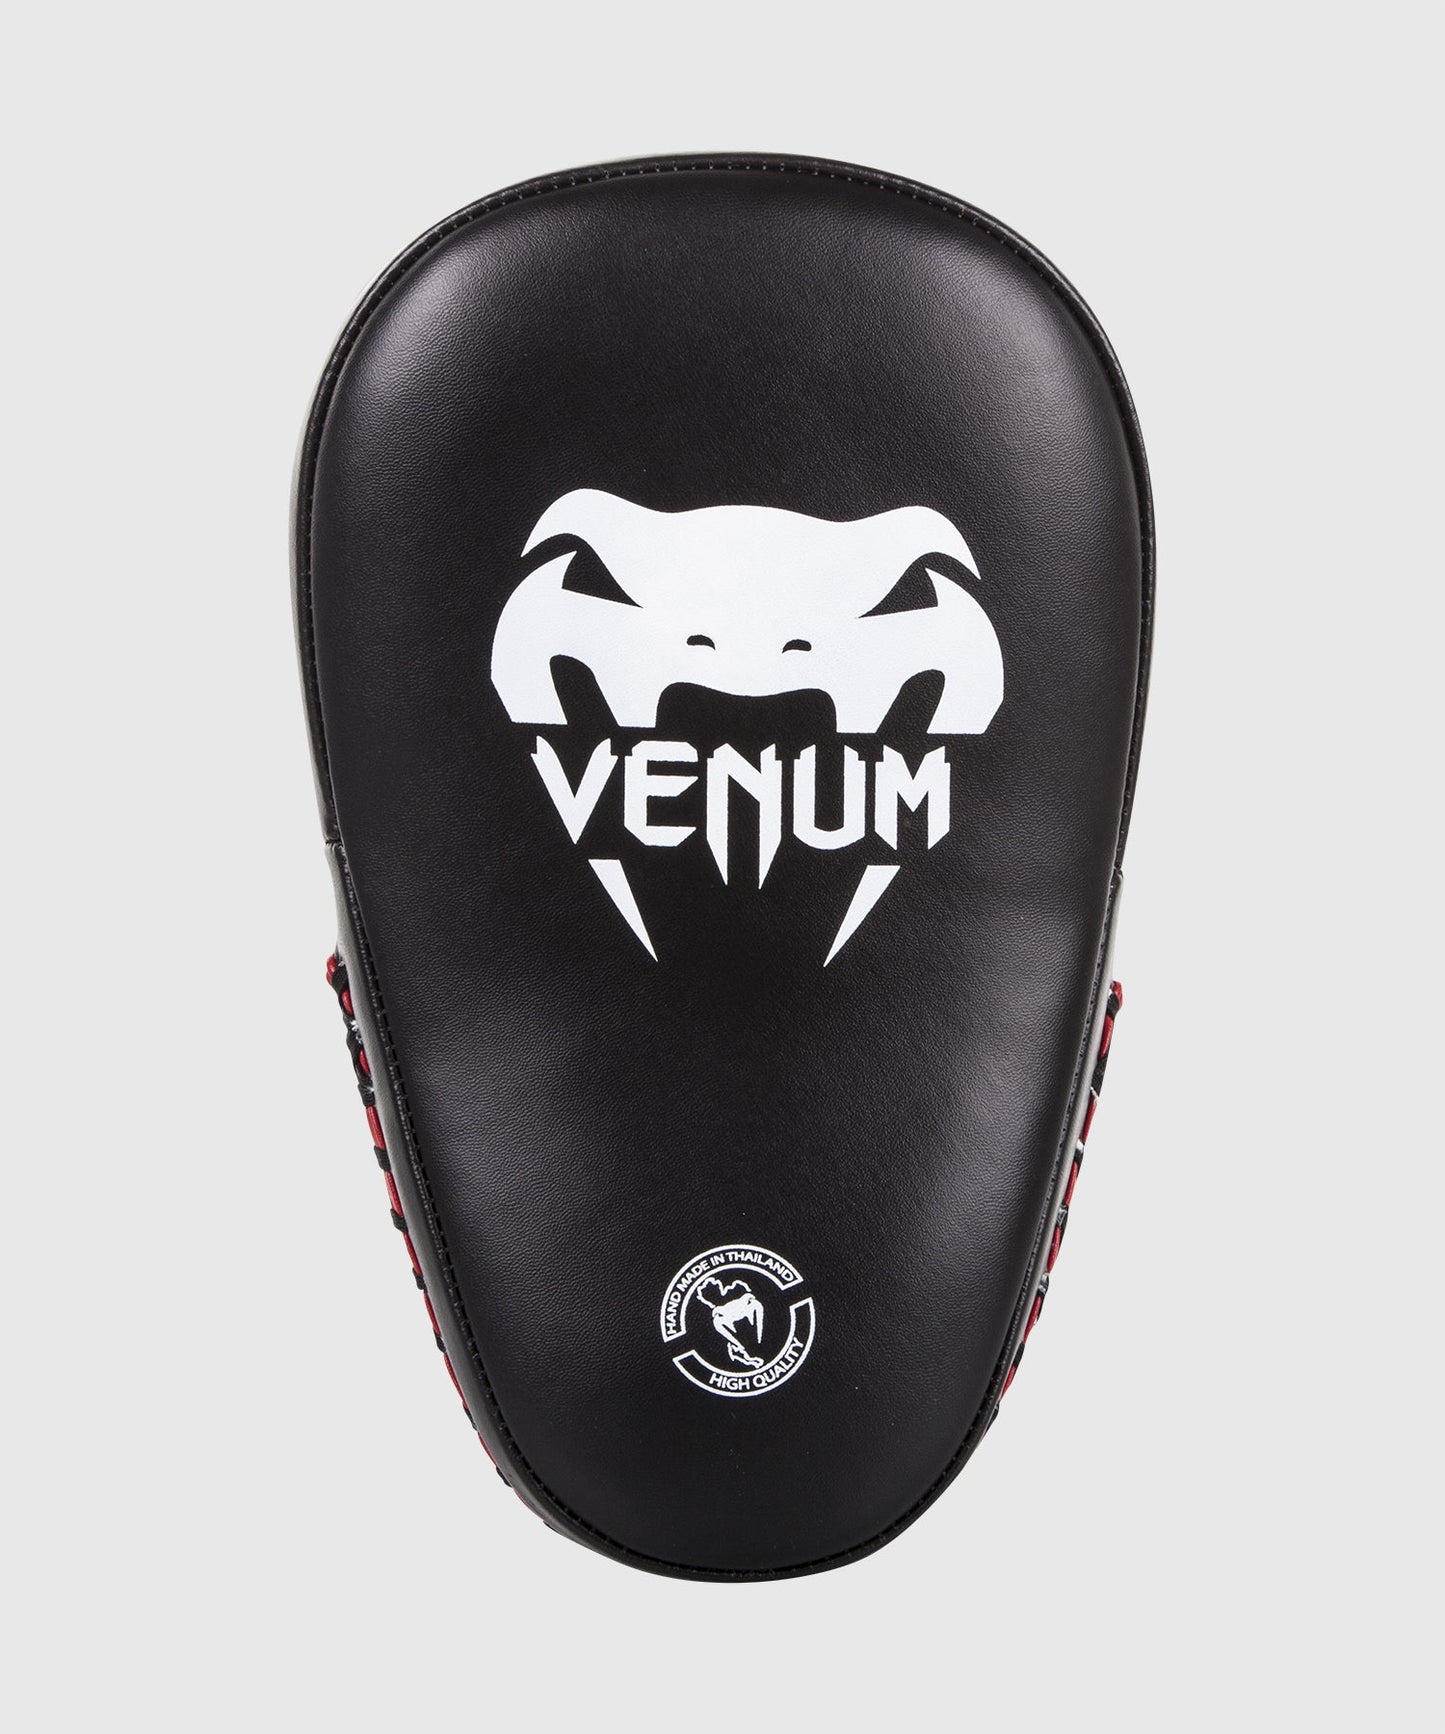 Venum Elite Small Kick Pads - Black/Red